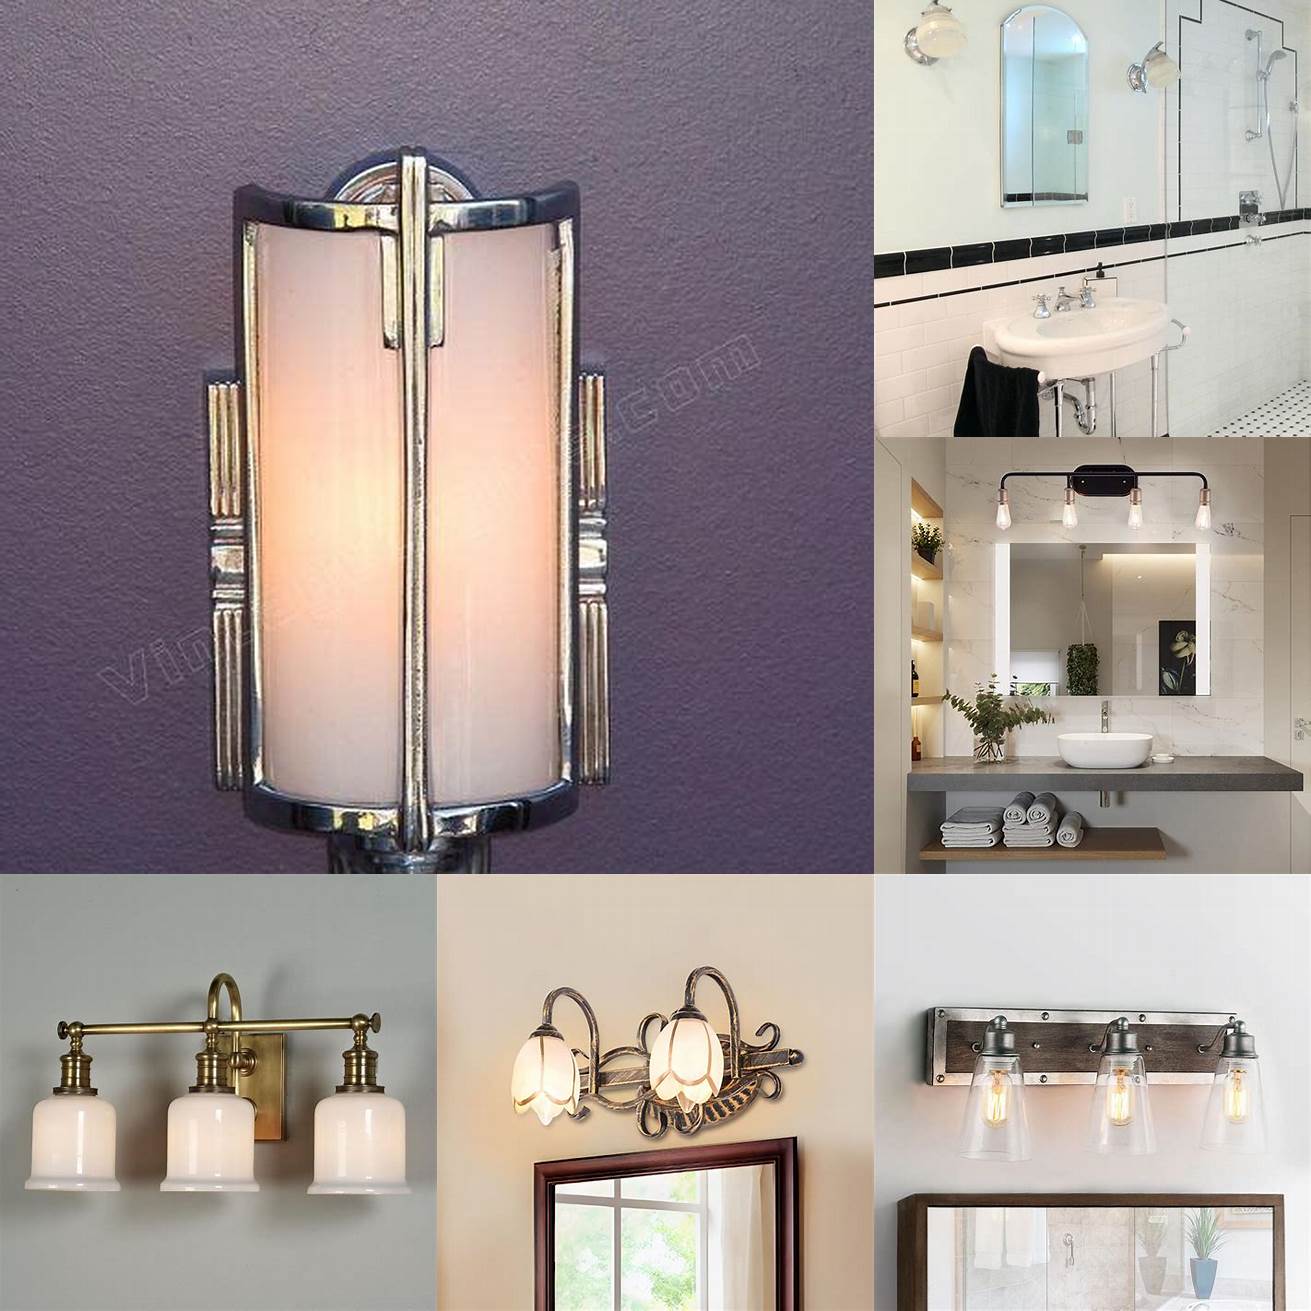 Art Deco-inspired vintage bathroom vanity lights